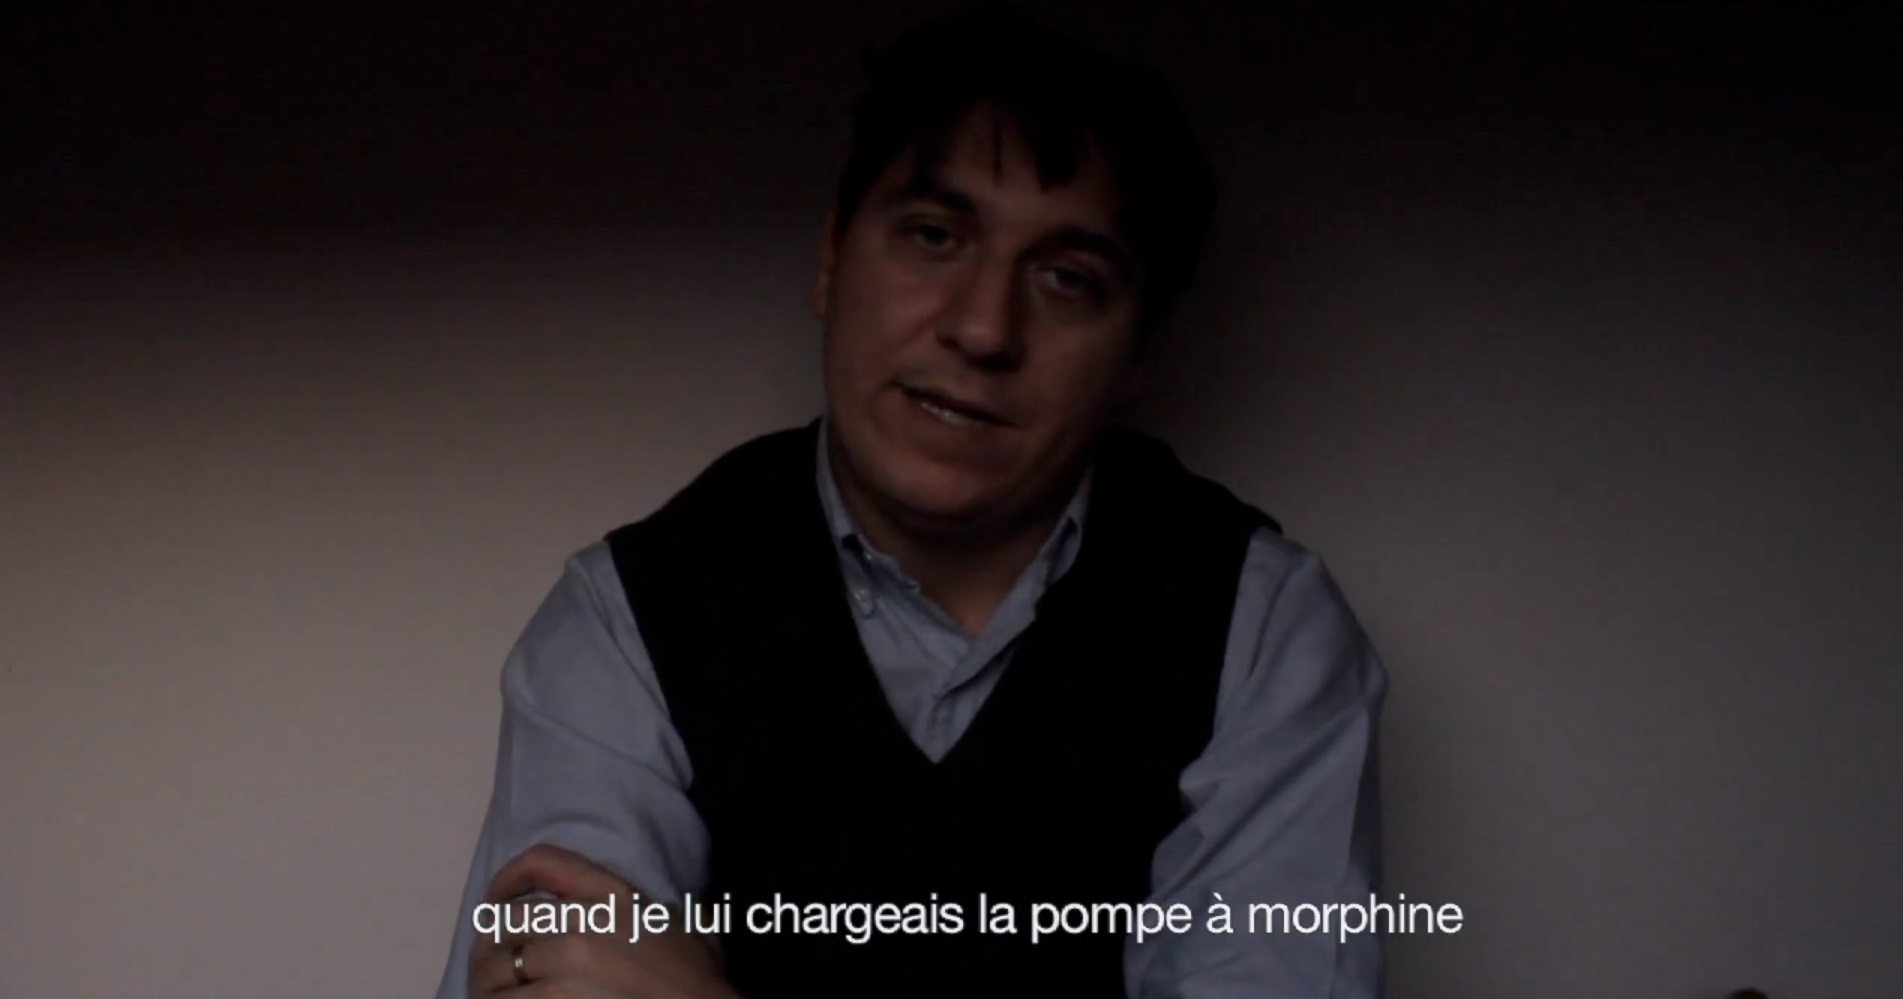 Intervista al fratello (Screenshot da terzi del film Casa, 2013).
